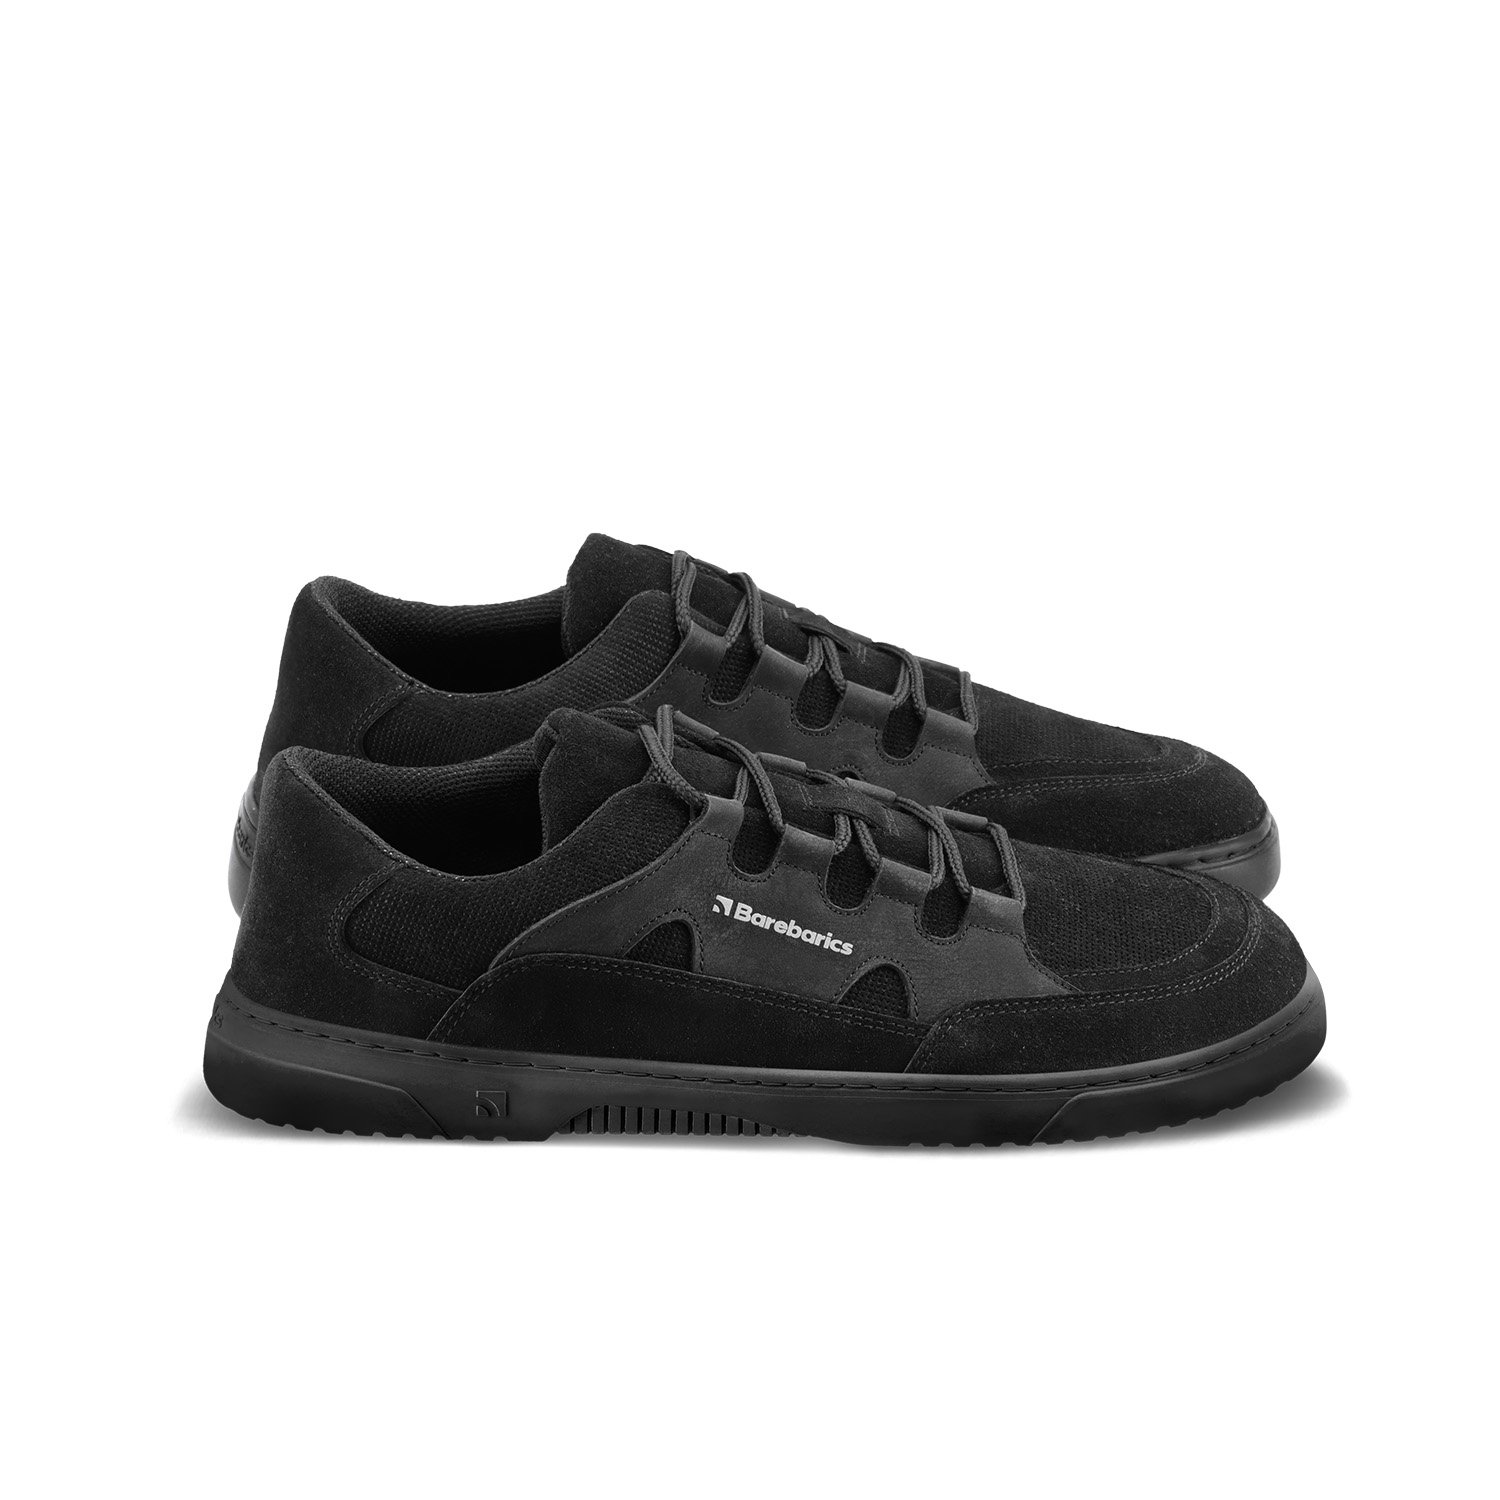 Black Sneakers - Selling Fast at Pantaloons.com